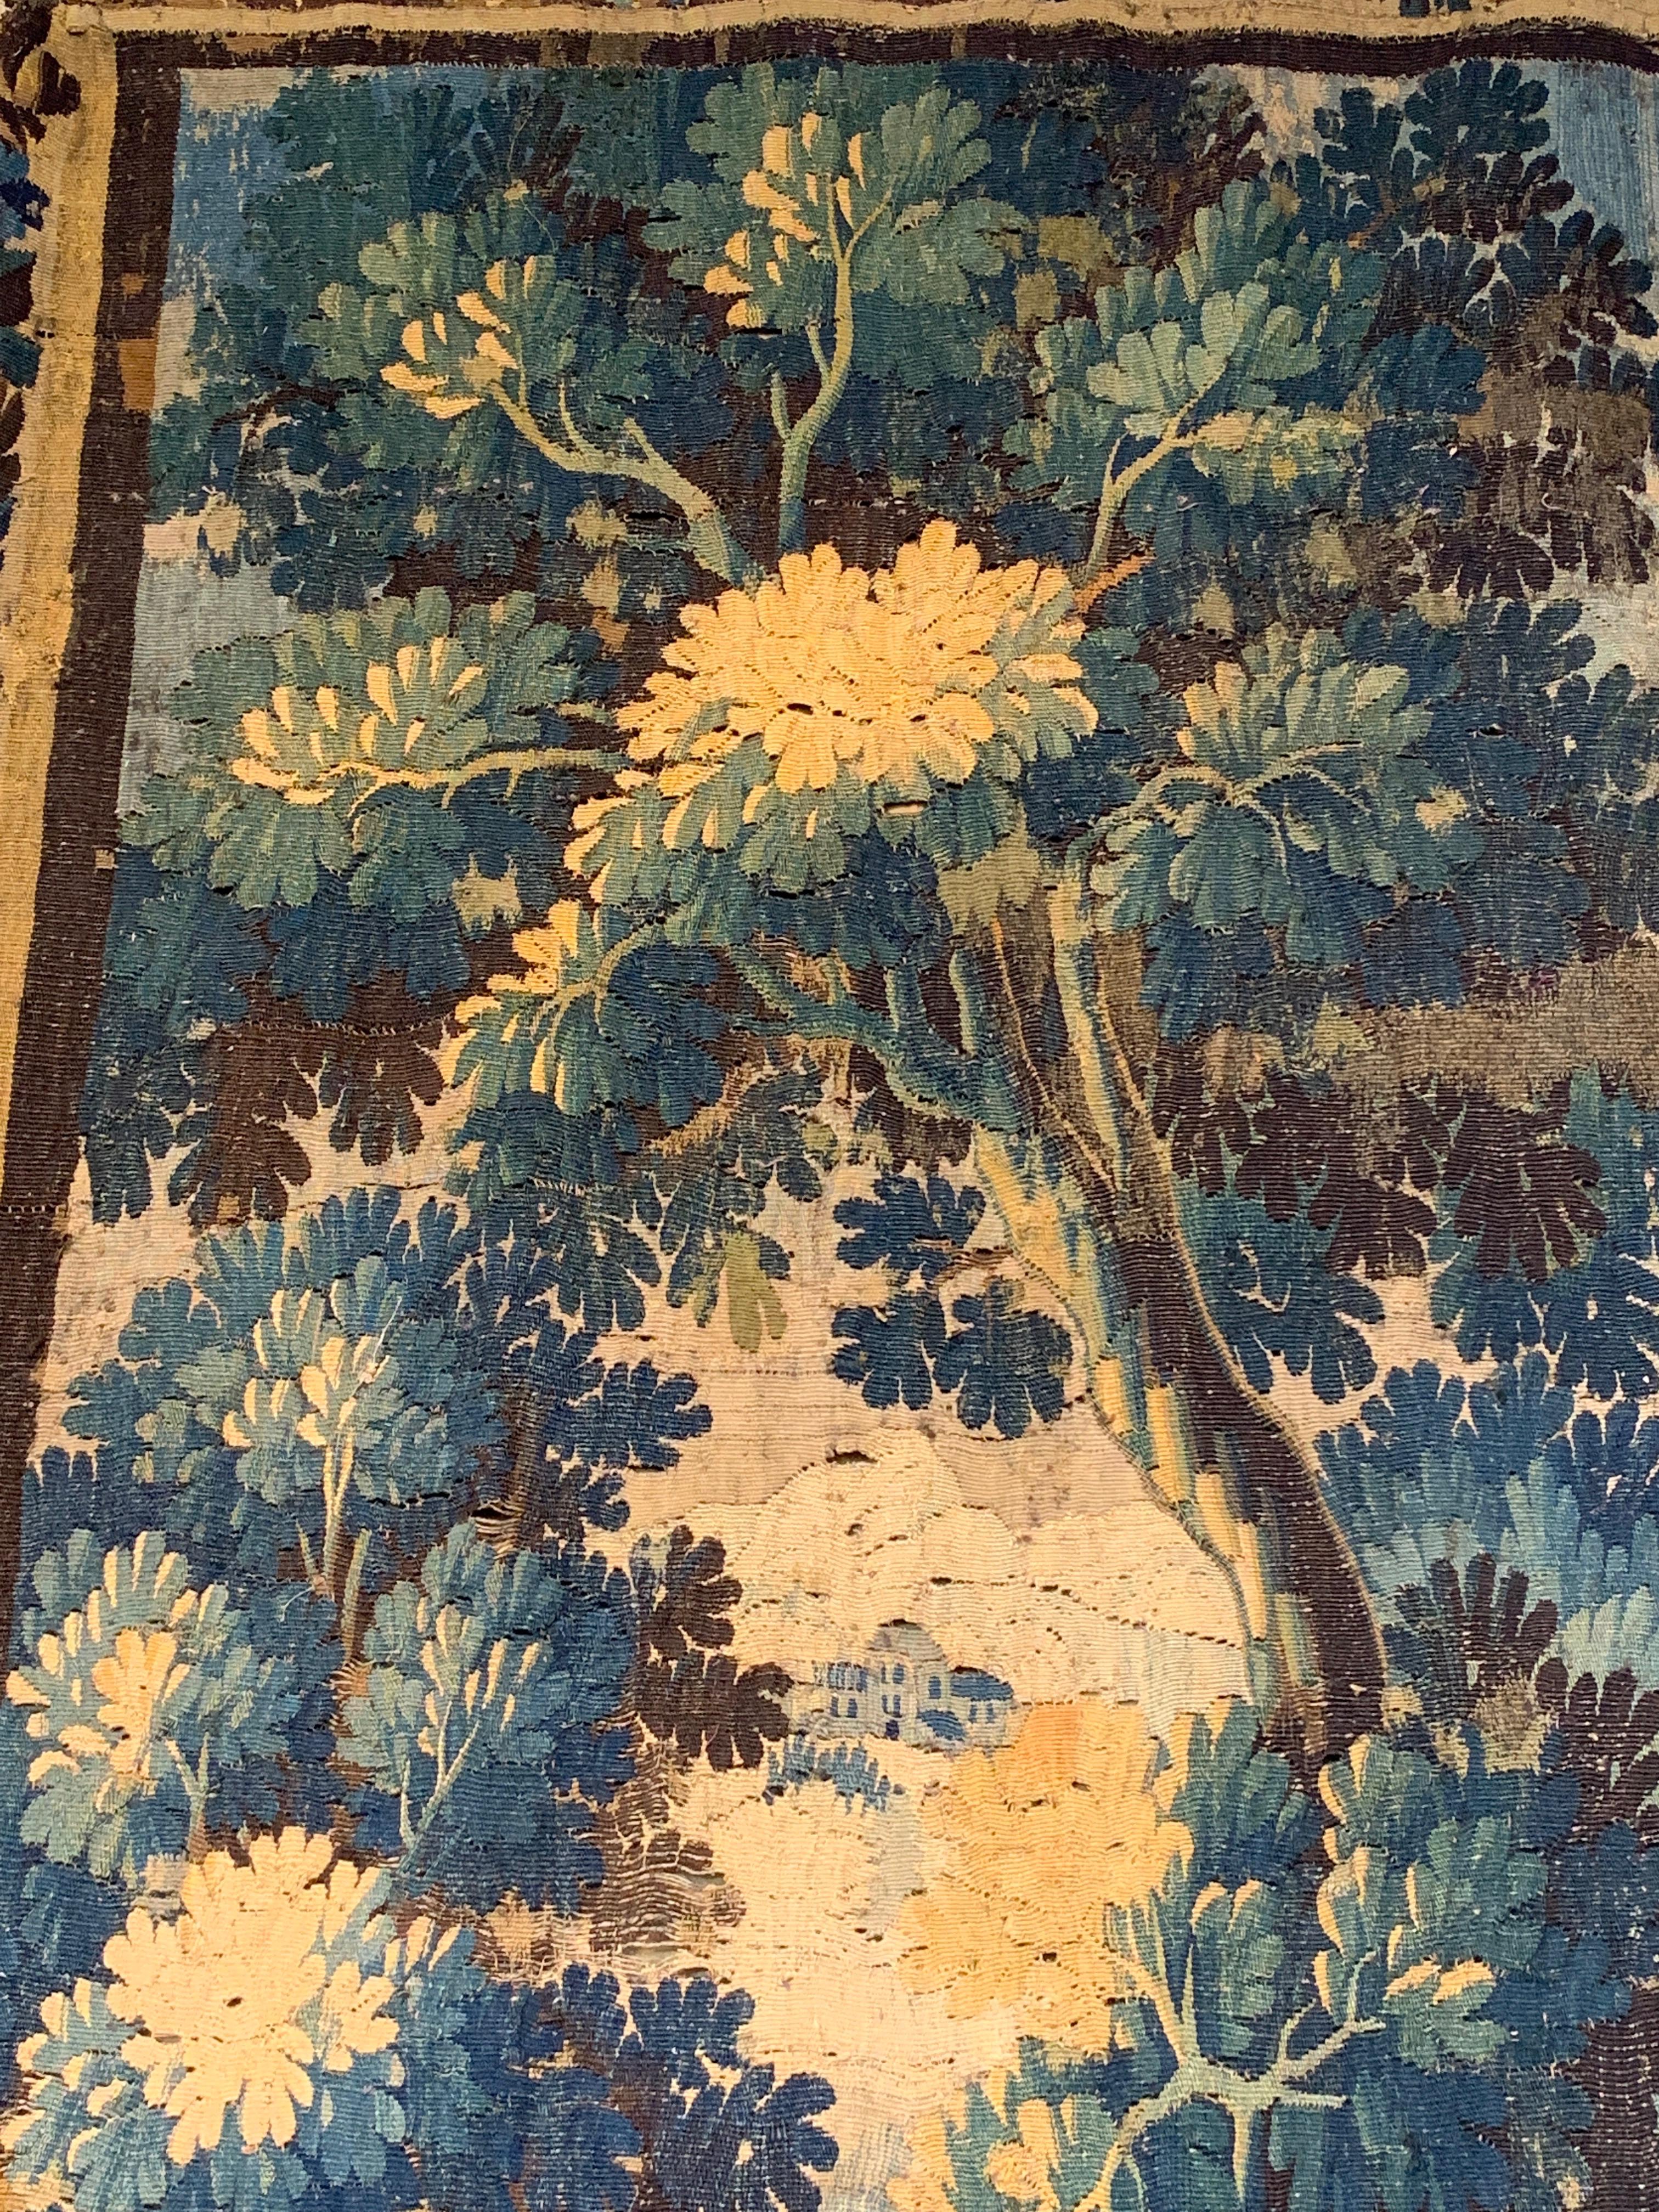 Belgian Early 18th Century Flemish Verdure Landscape Tapestry